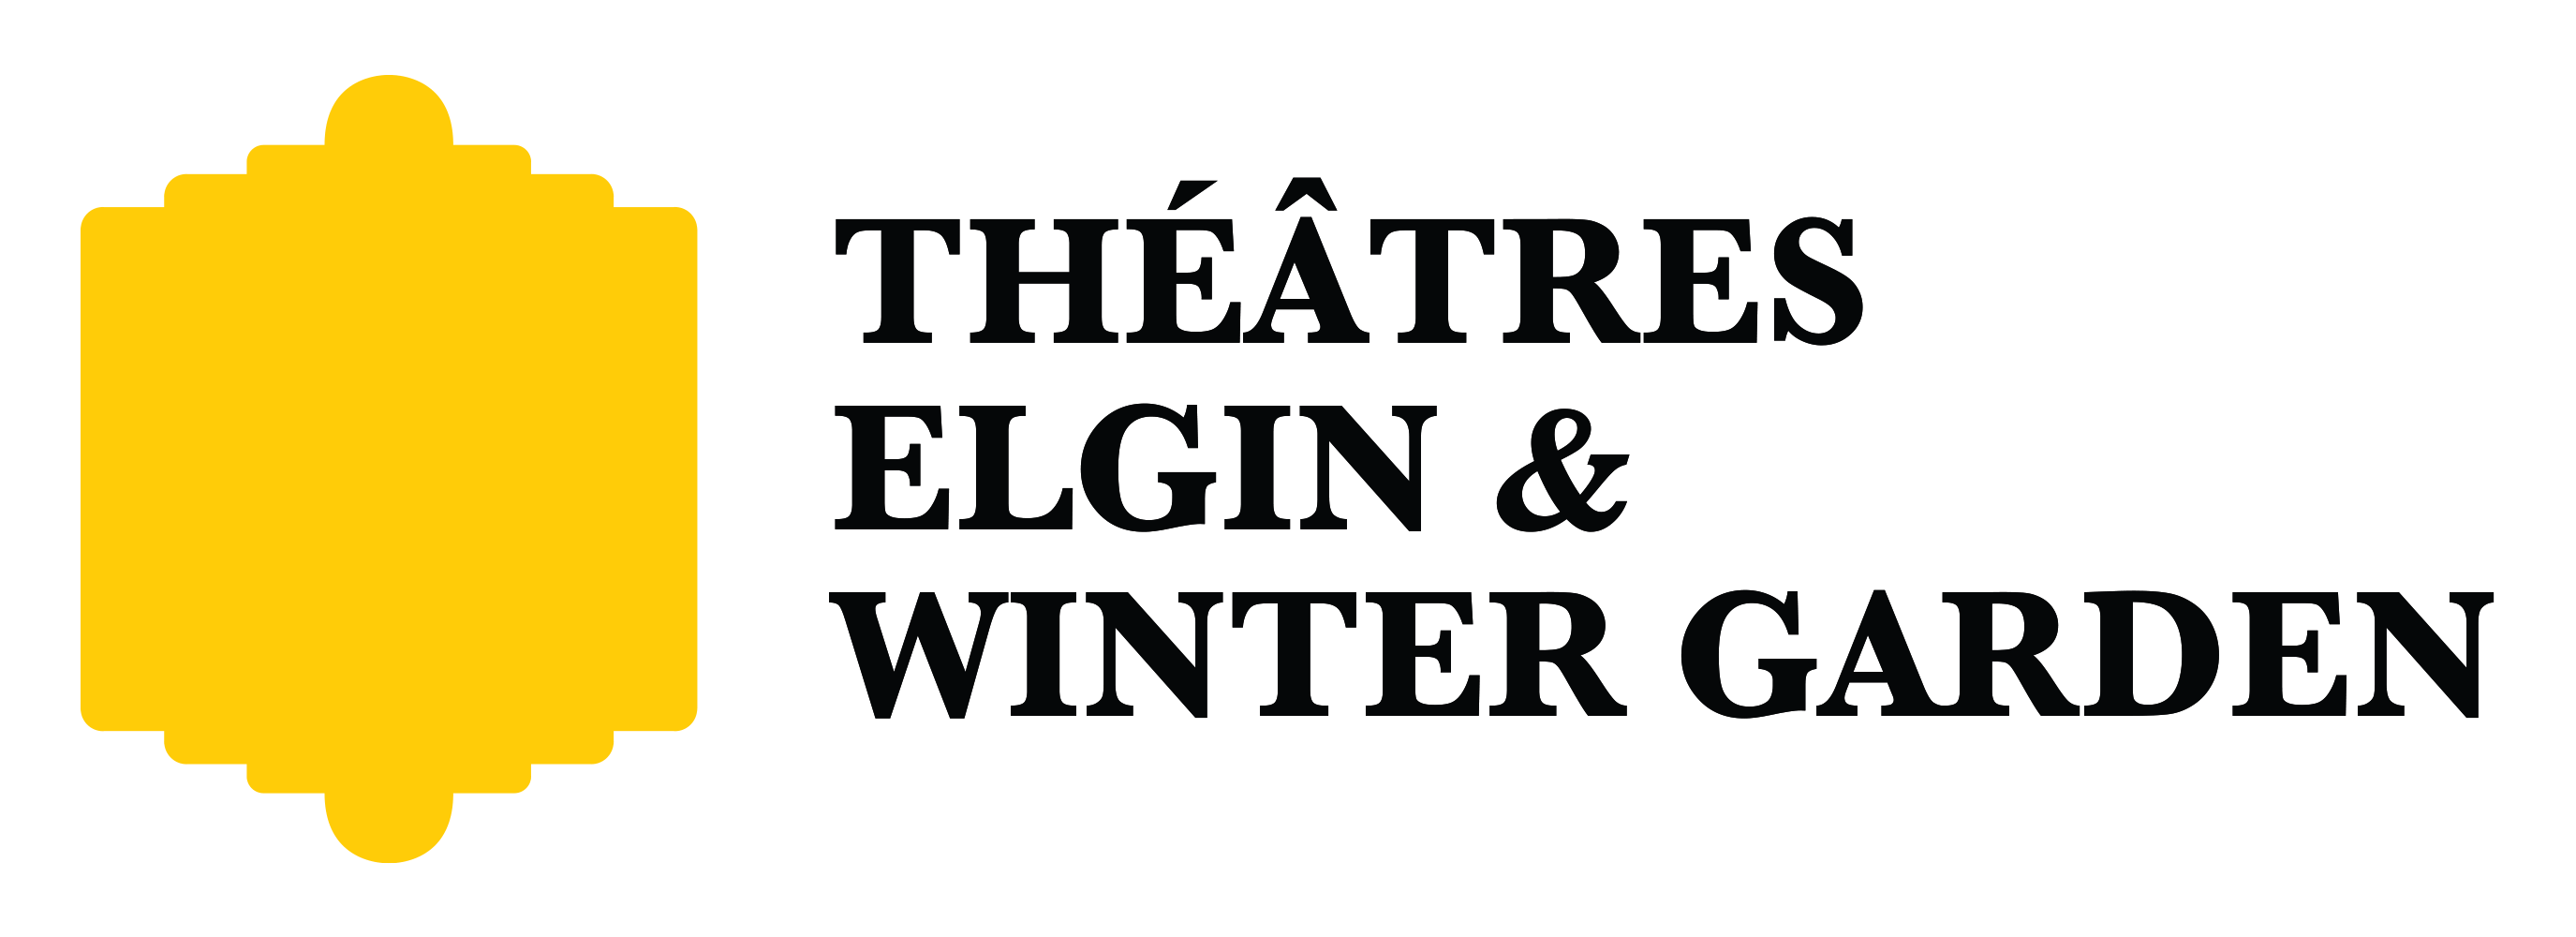 The Elgin and Winter Garden Theatre